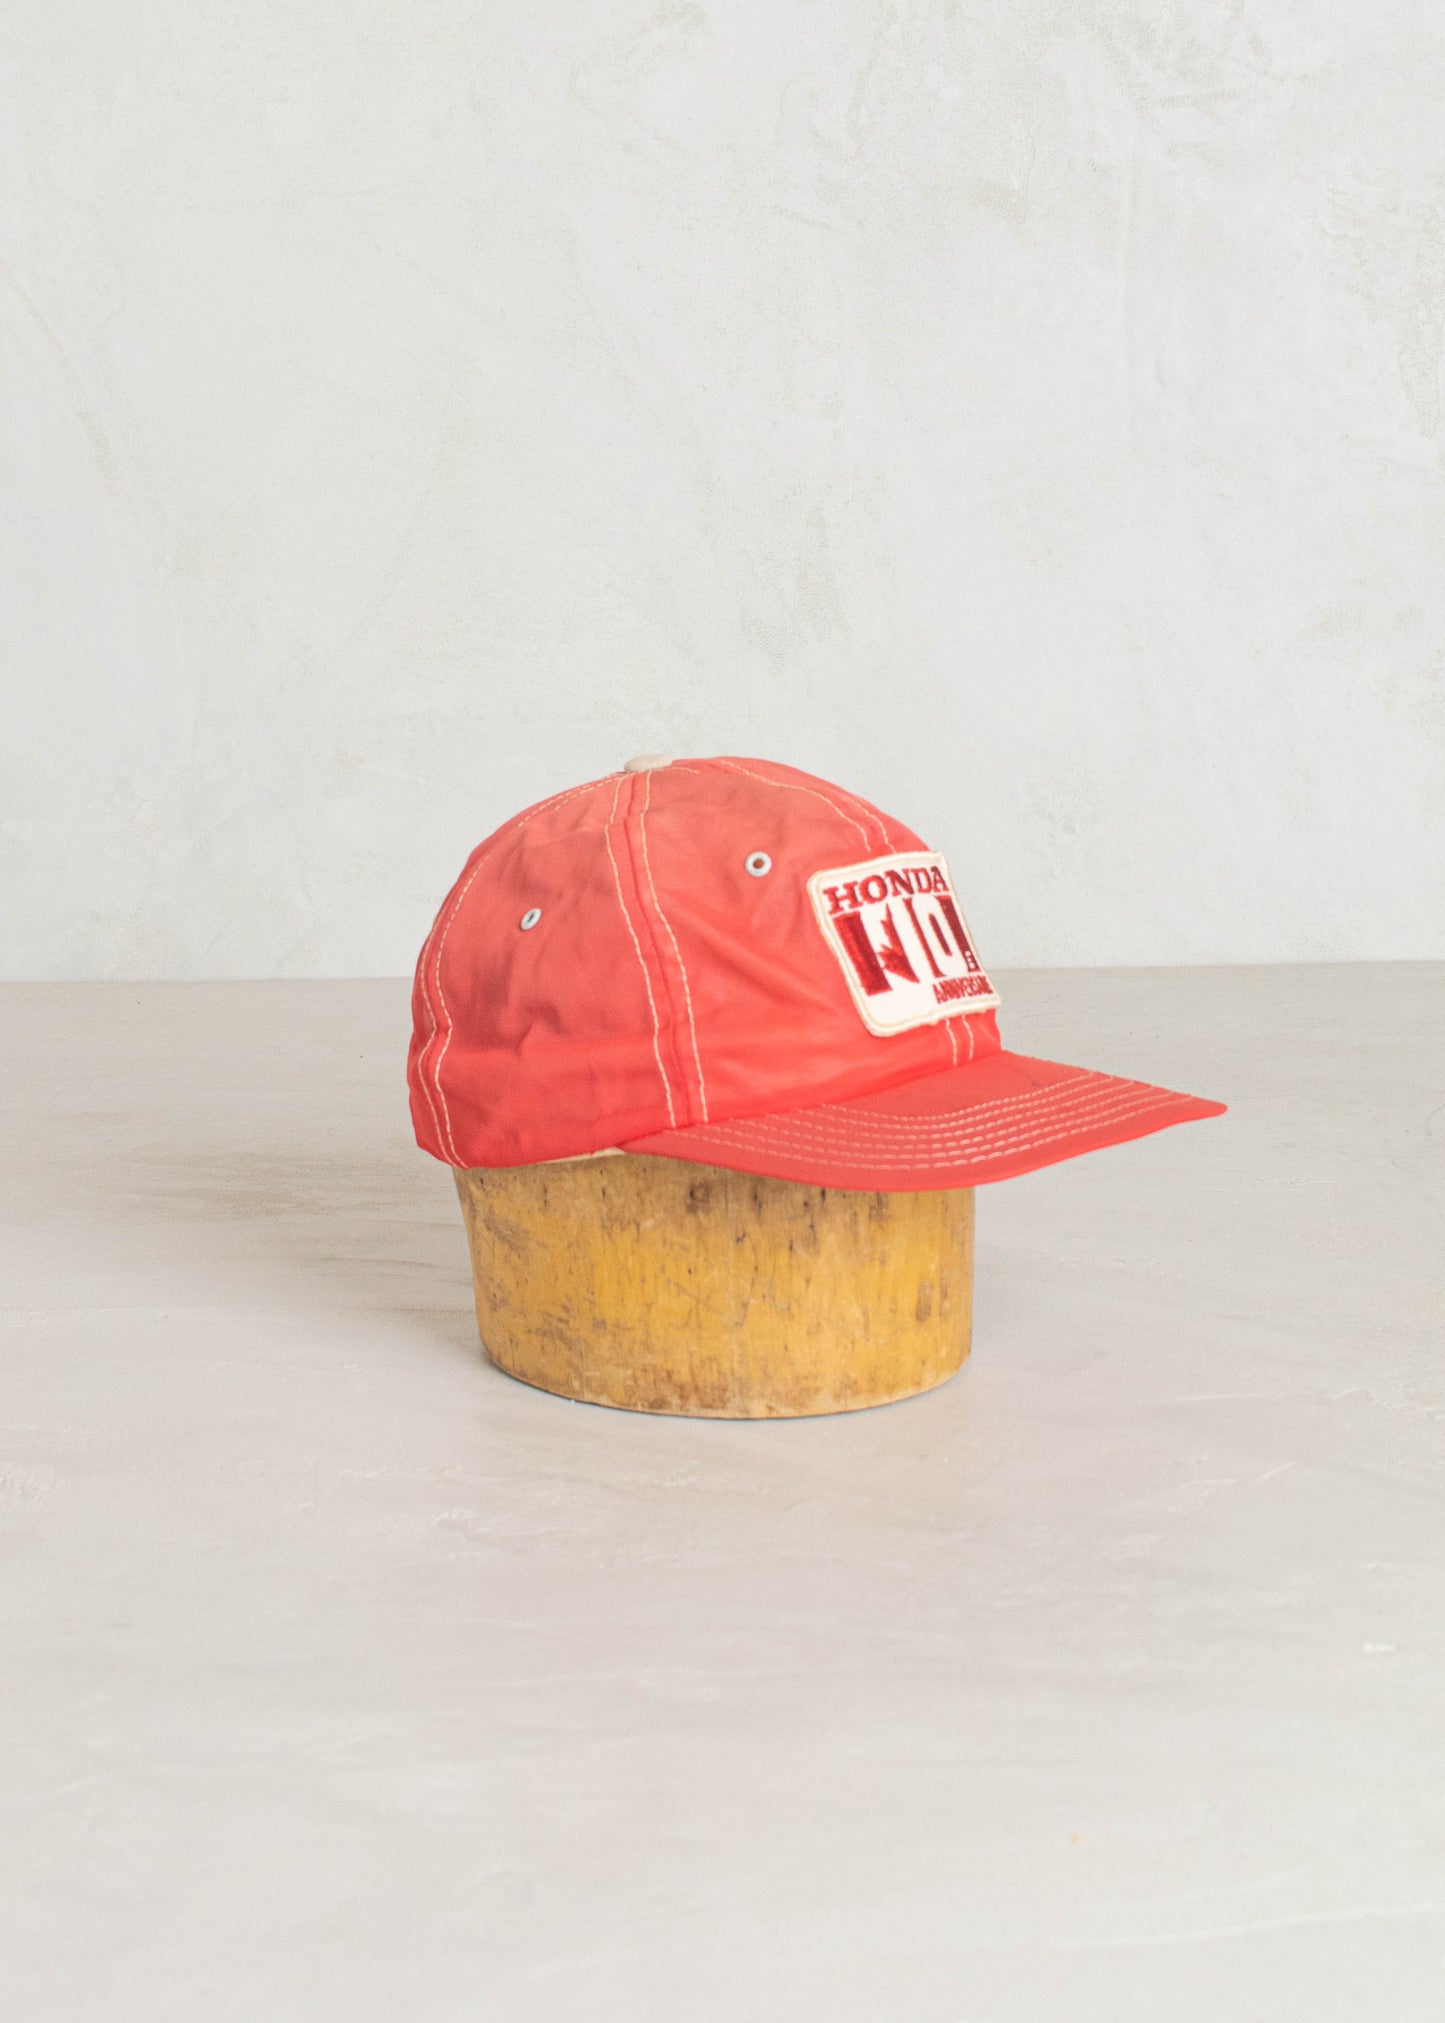 1970s Victory Caps Honda 10th Anniversary Baseball Hat